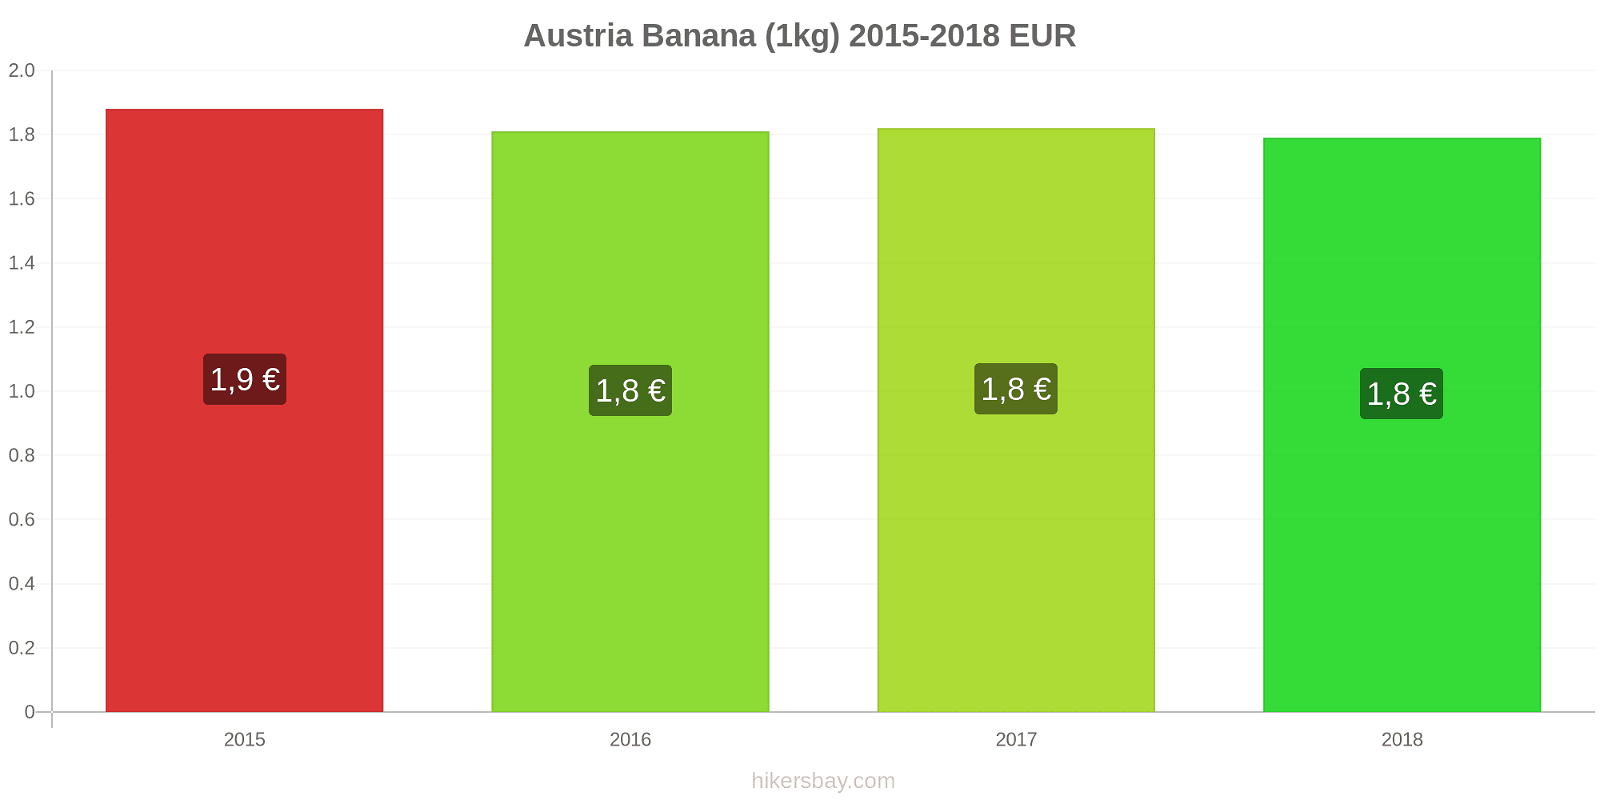 Austria cambi di prezzo Banane (1kg) hikersbay.com